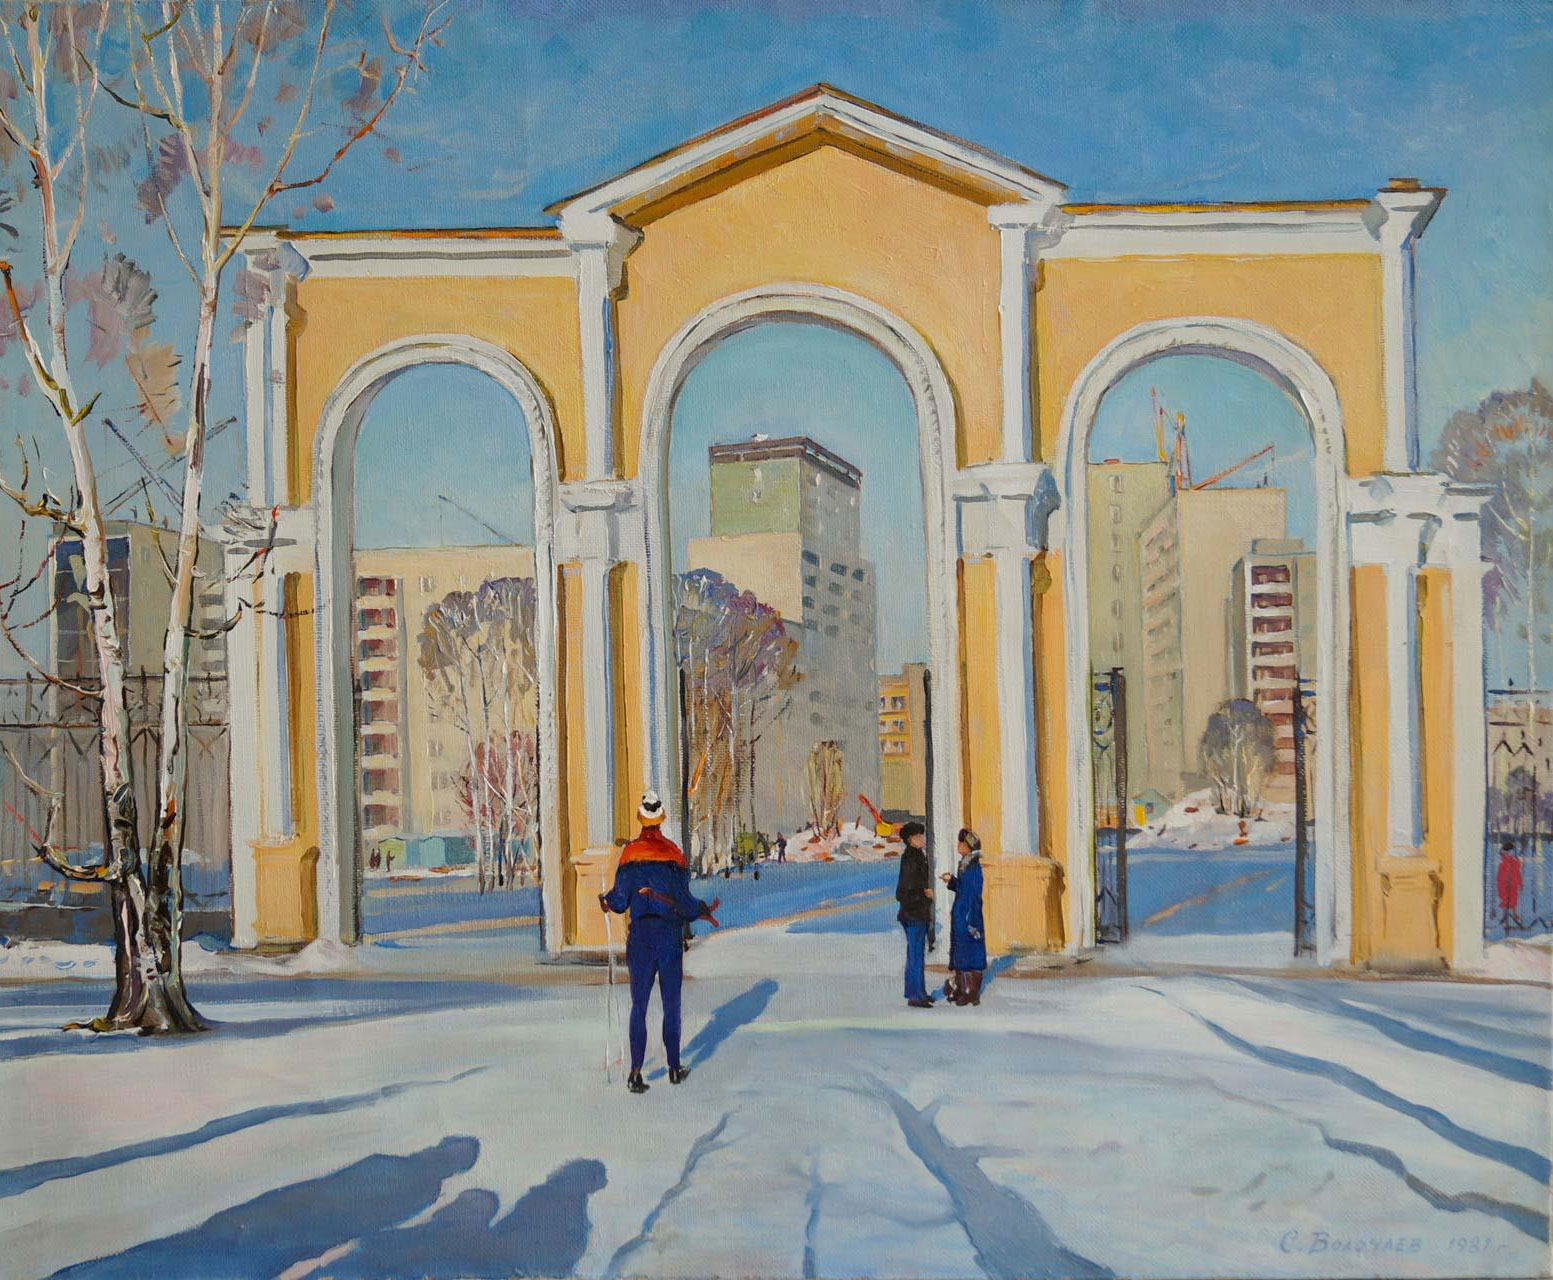 Mayakovsky Park - 1, Sergei Volochaev, Buy the painting Oil